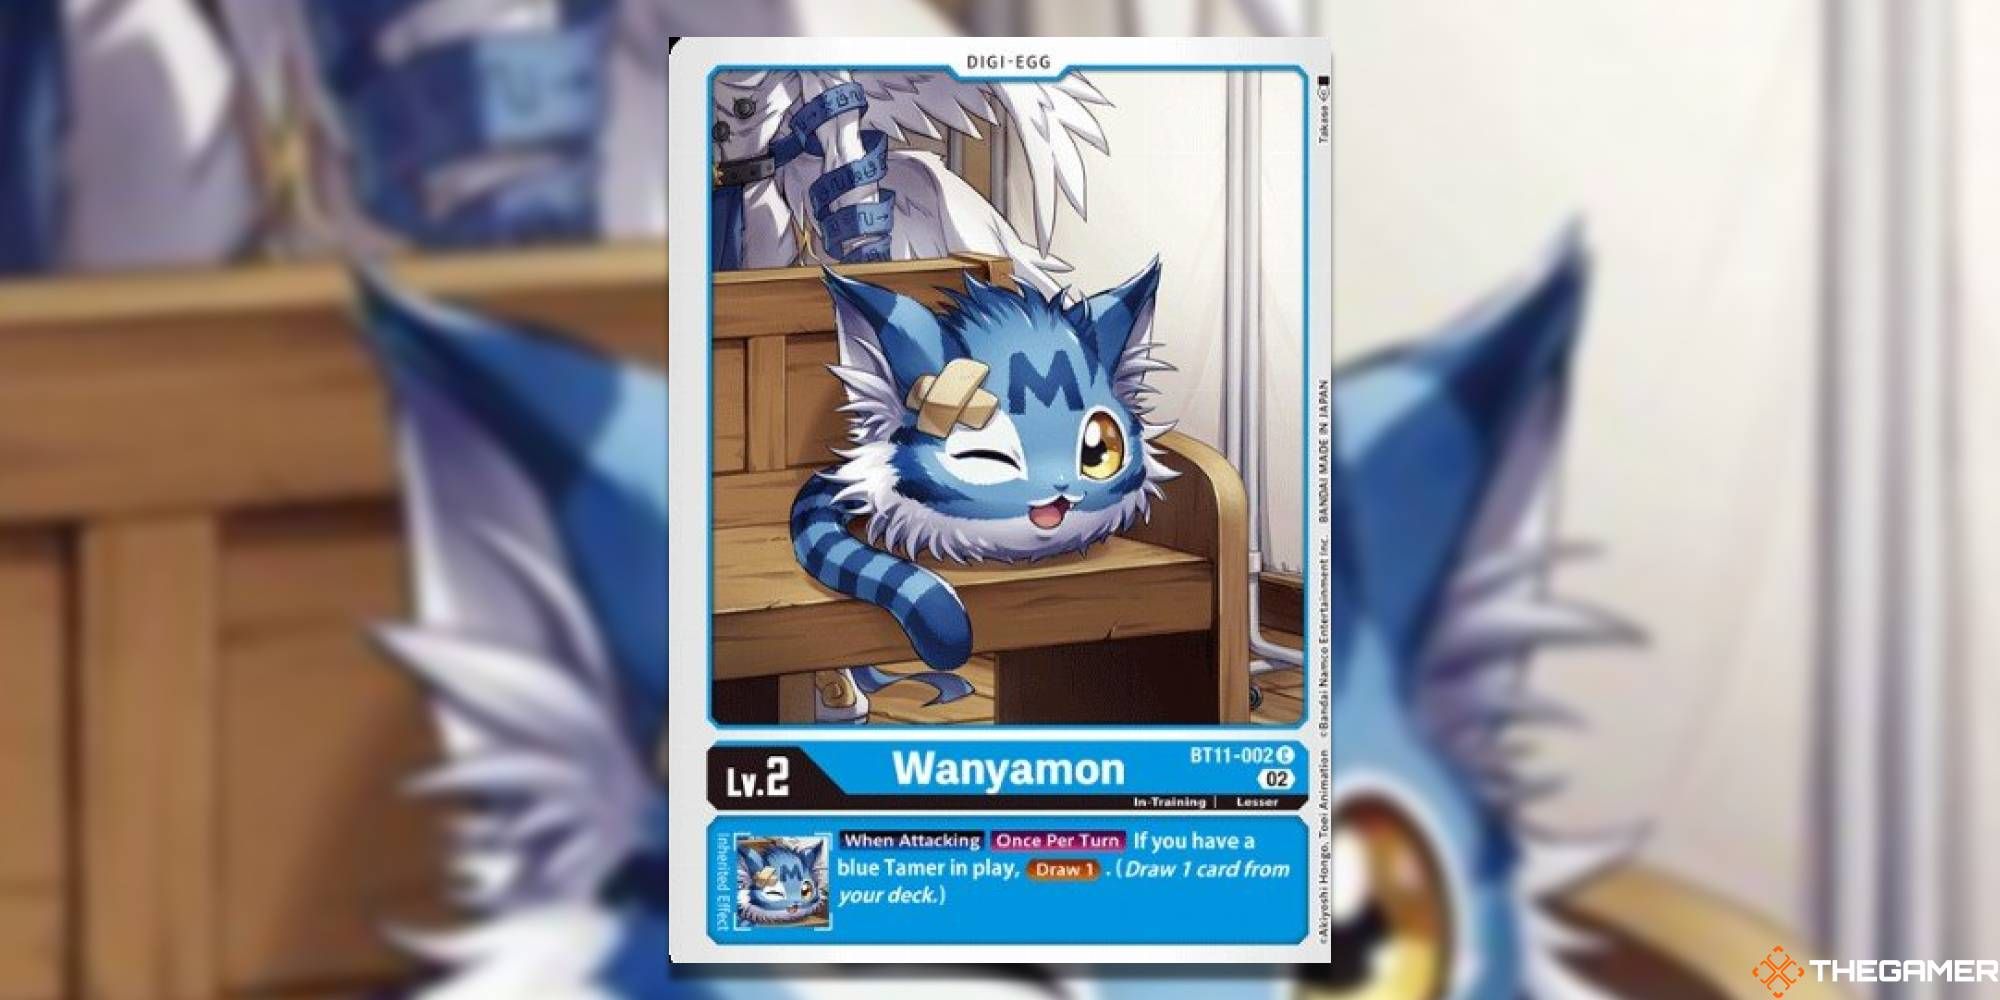 BT11 Wanyamon DigiEgg Digimon Dimension Phase